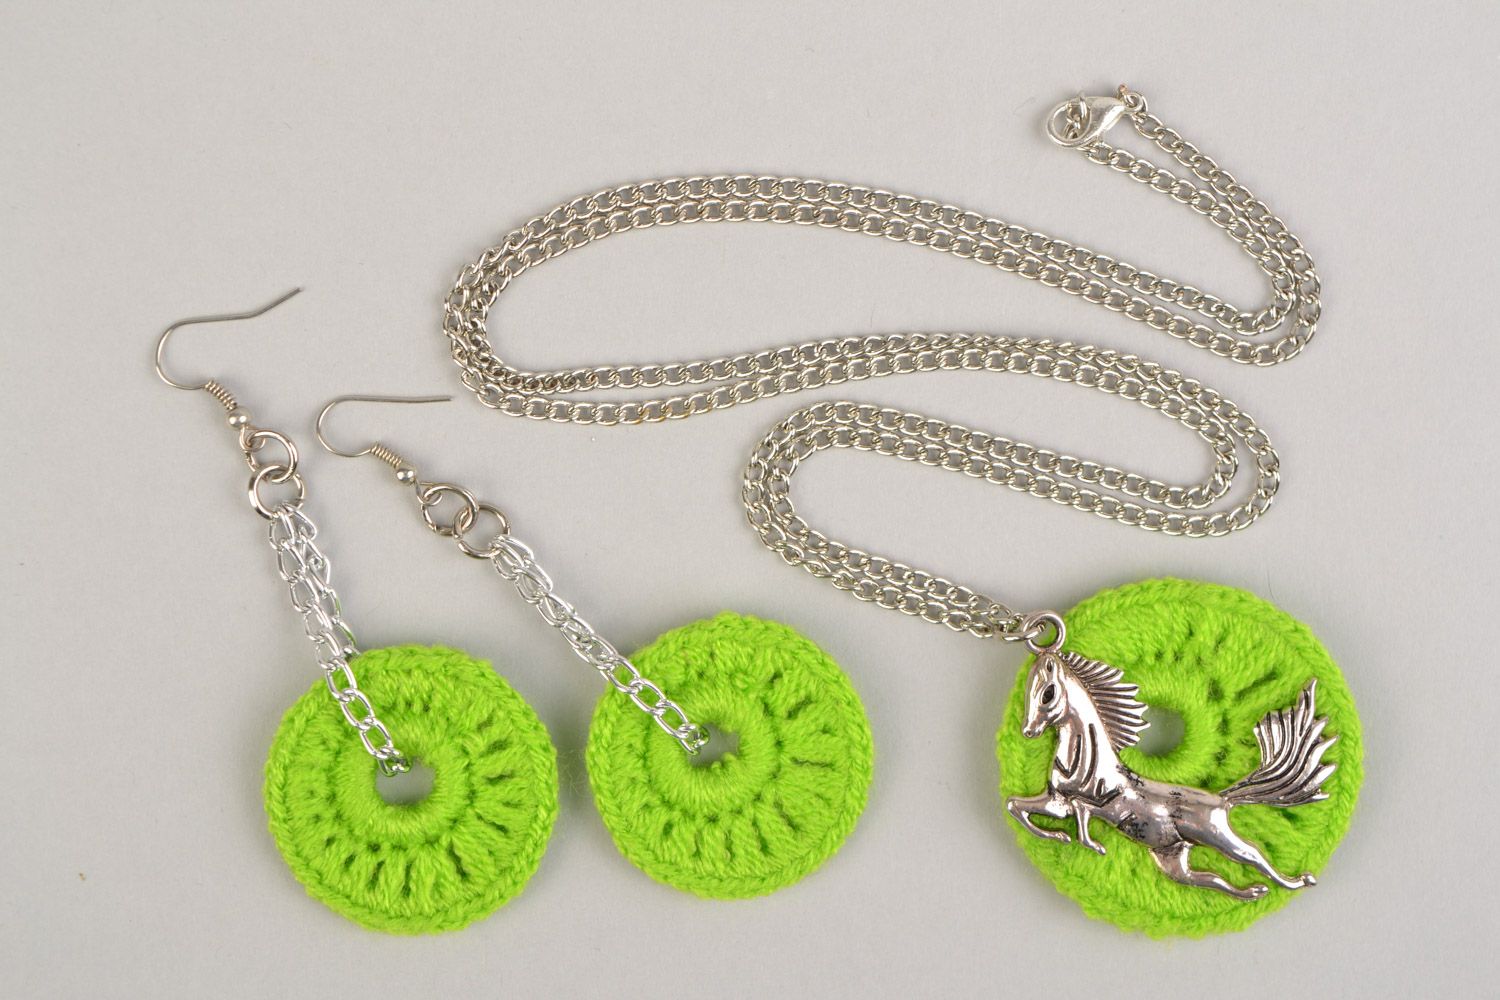 Handmade thread woven jewelry set 2 items yellow green earrings and pendant photo 2